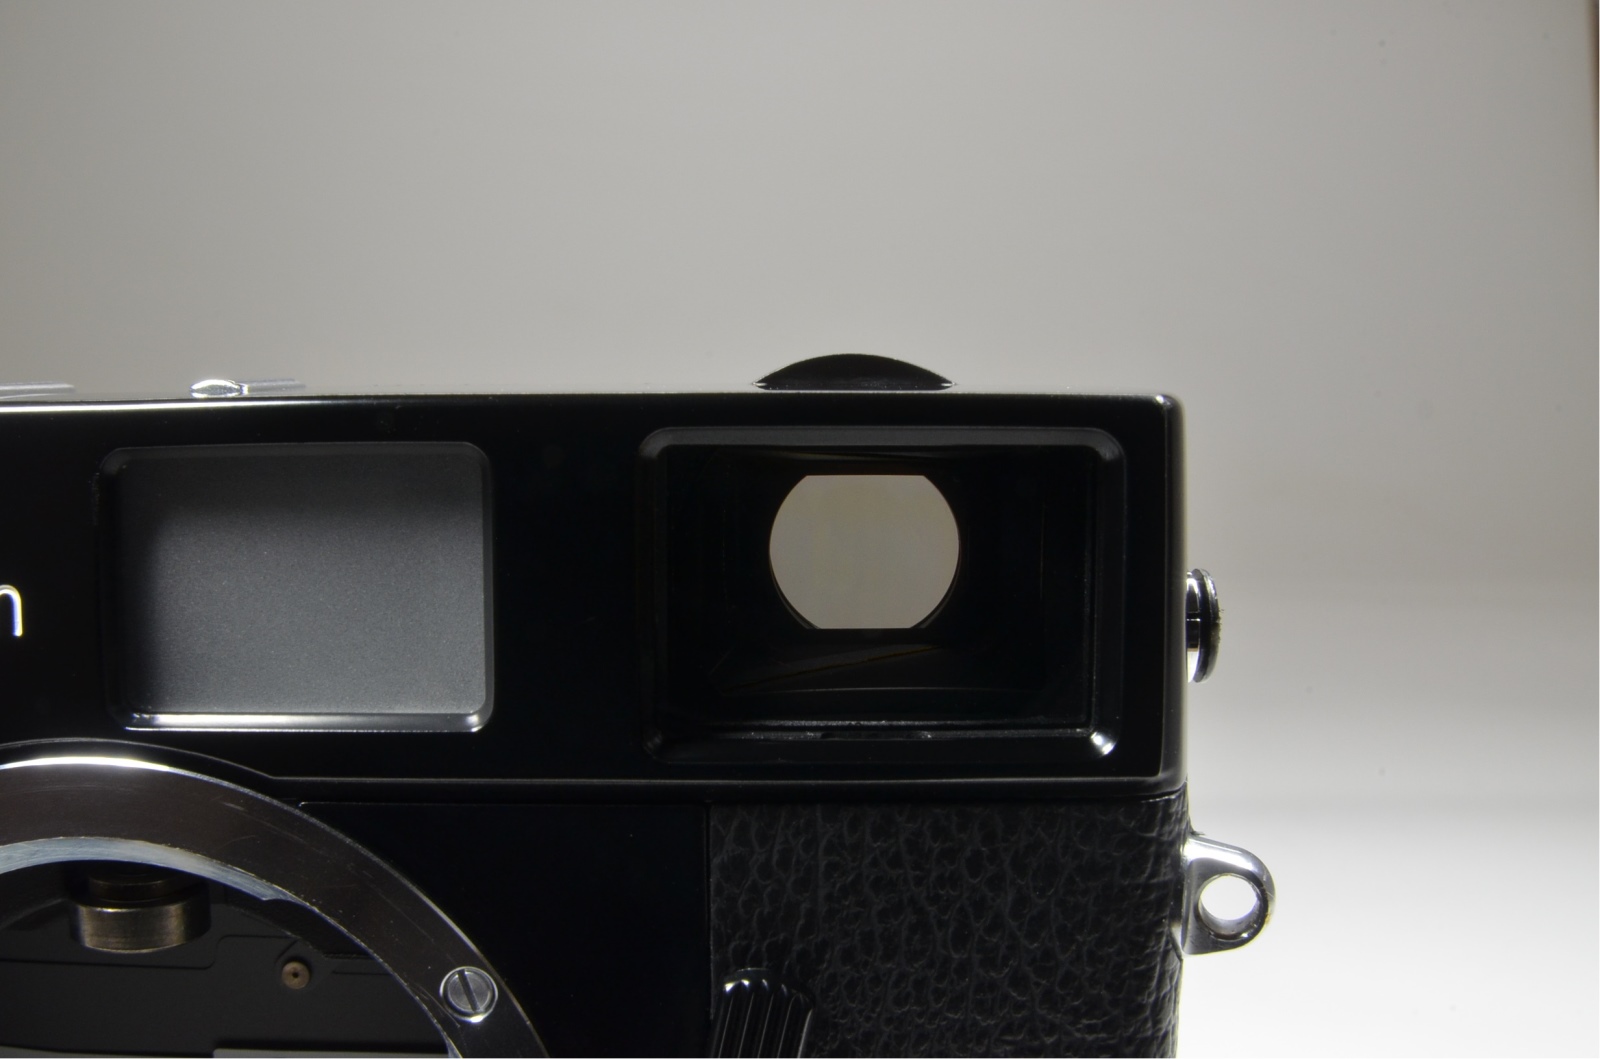 zeiss ikon zm 35mm rangefinder film camera in black with strap